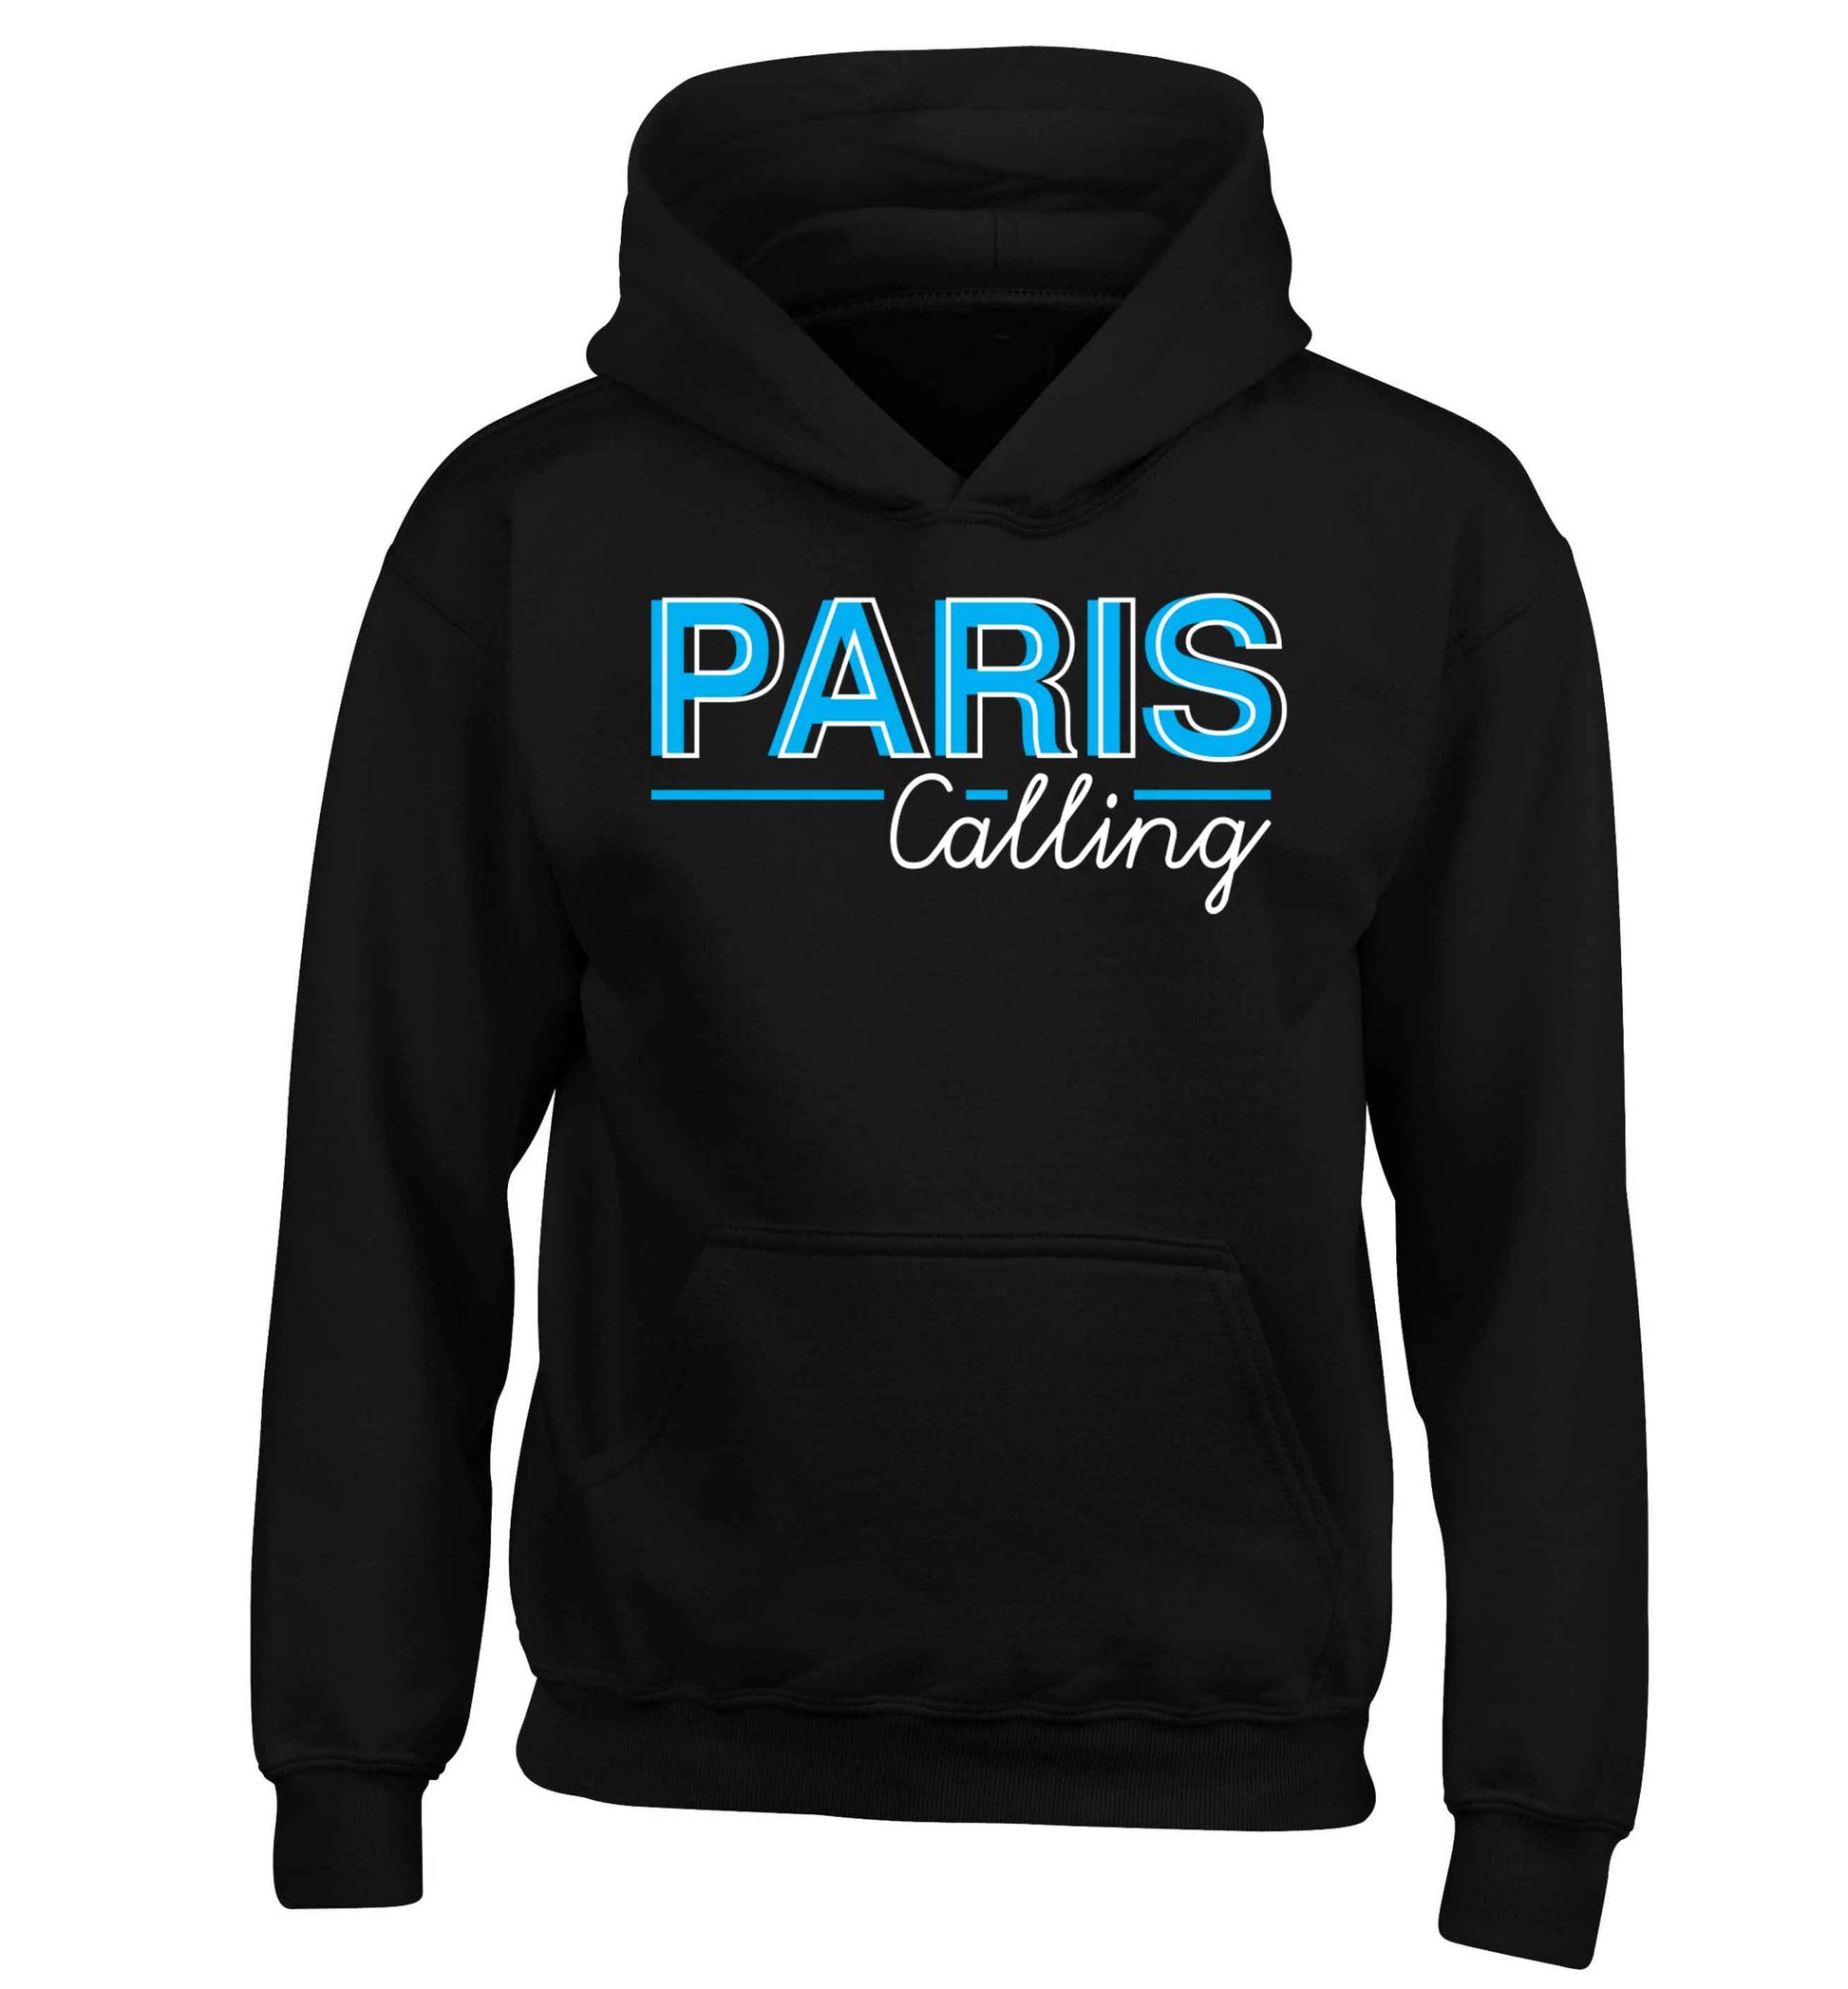 Paris calling children's black hoodie 12-13 Years